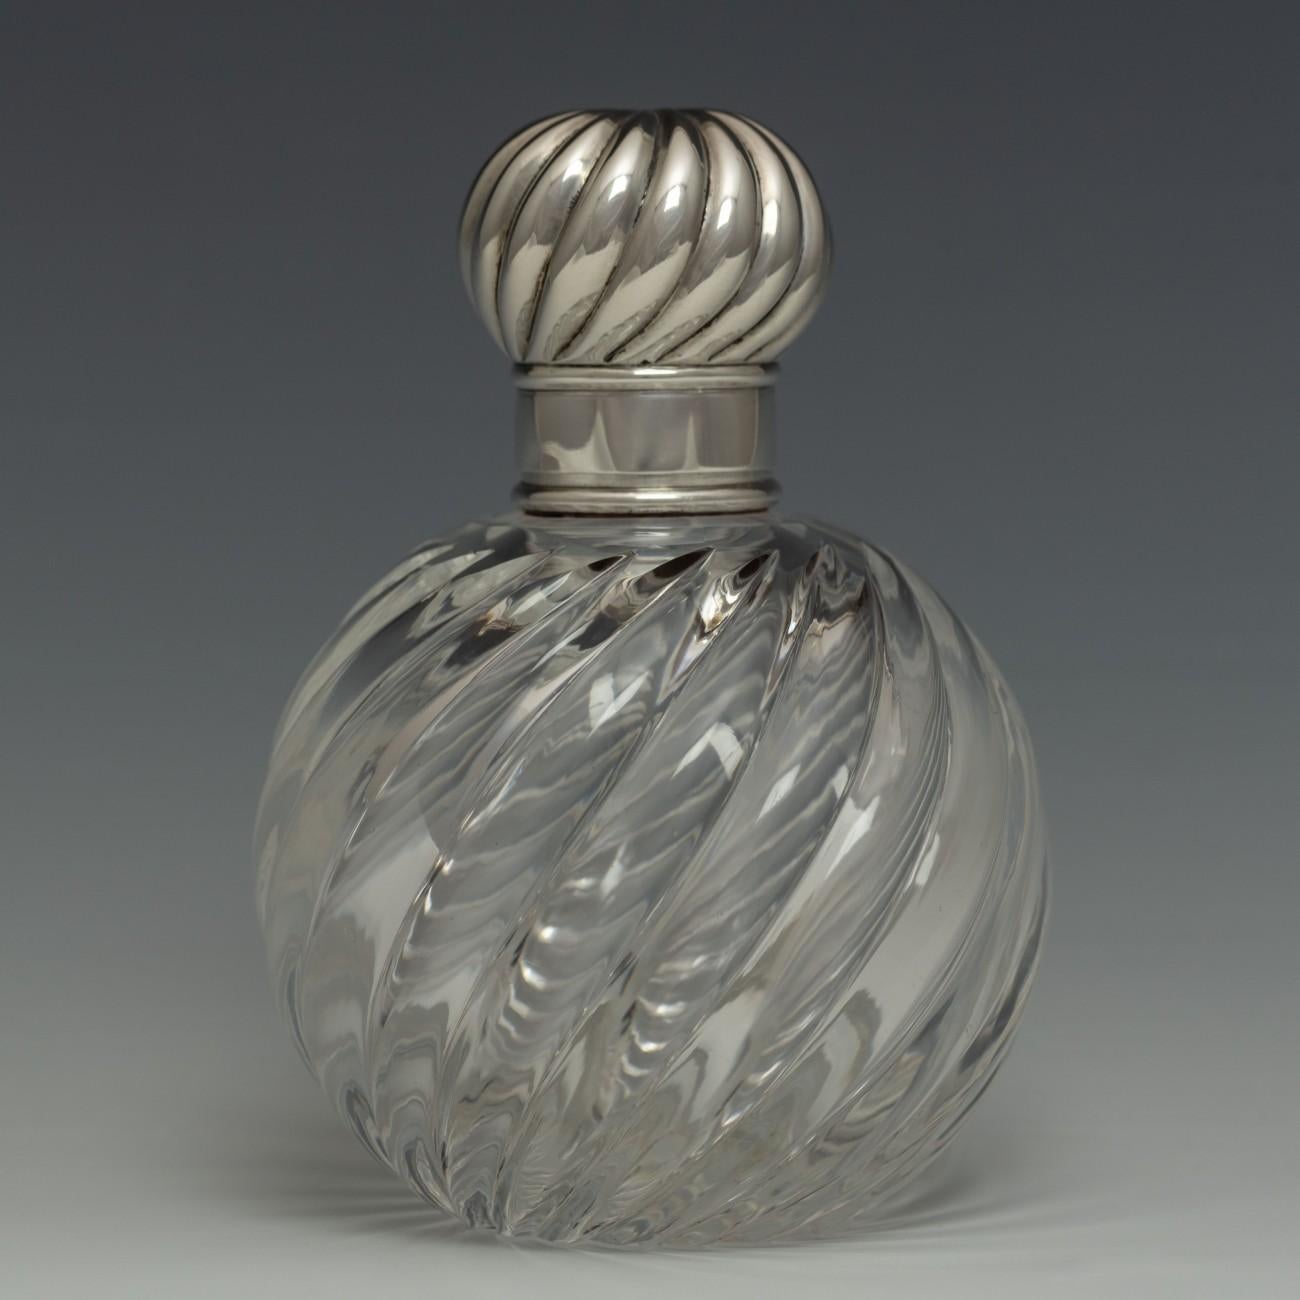 British Wrythen Glass and Sterling Silver Perfume Bottle, Hallmarked, 1886